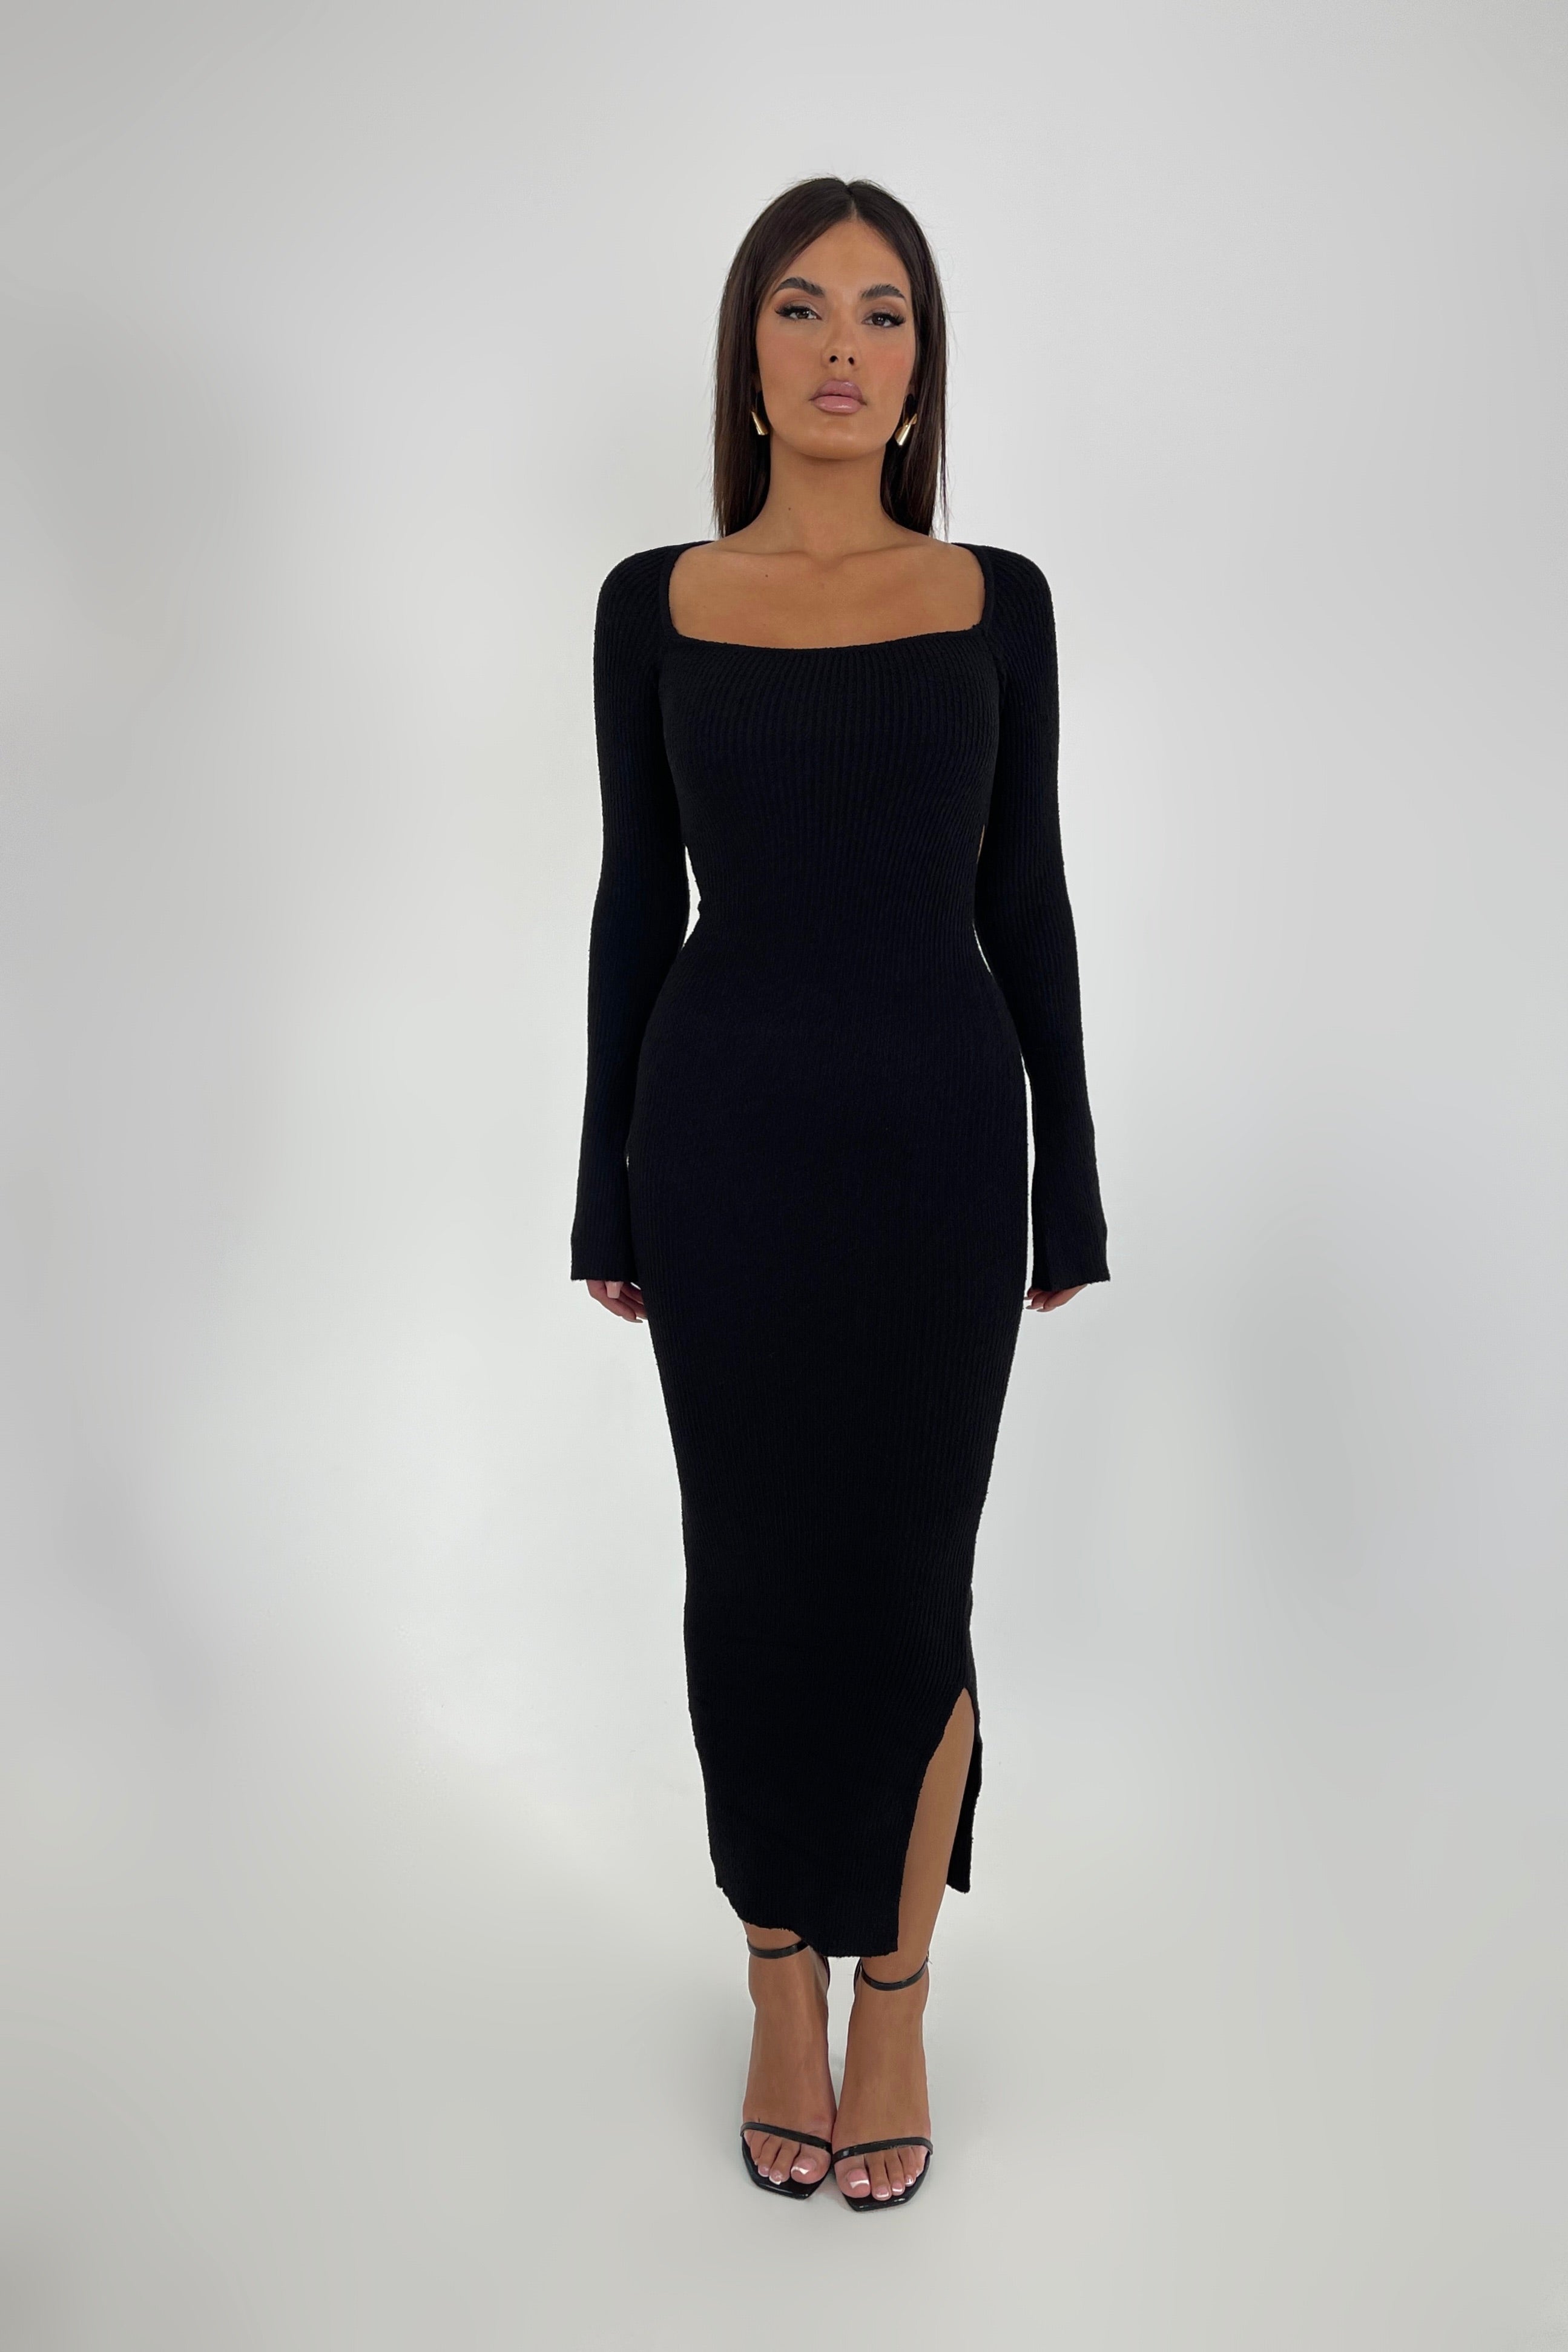 Maline Black Dress